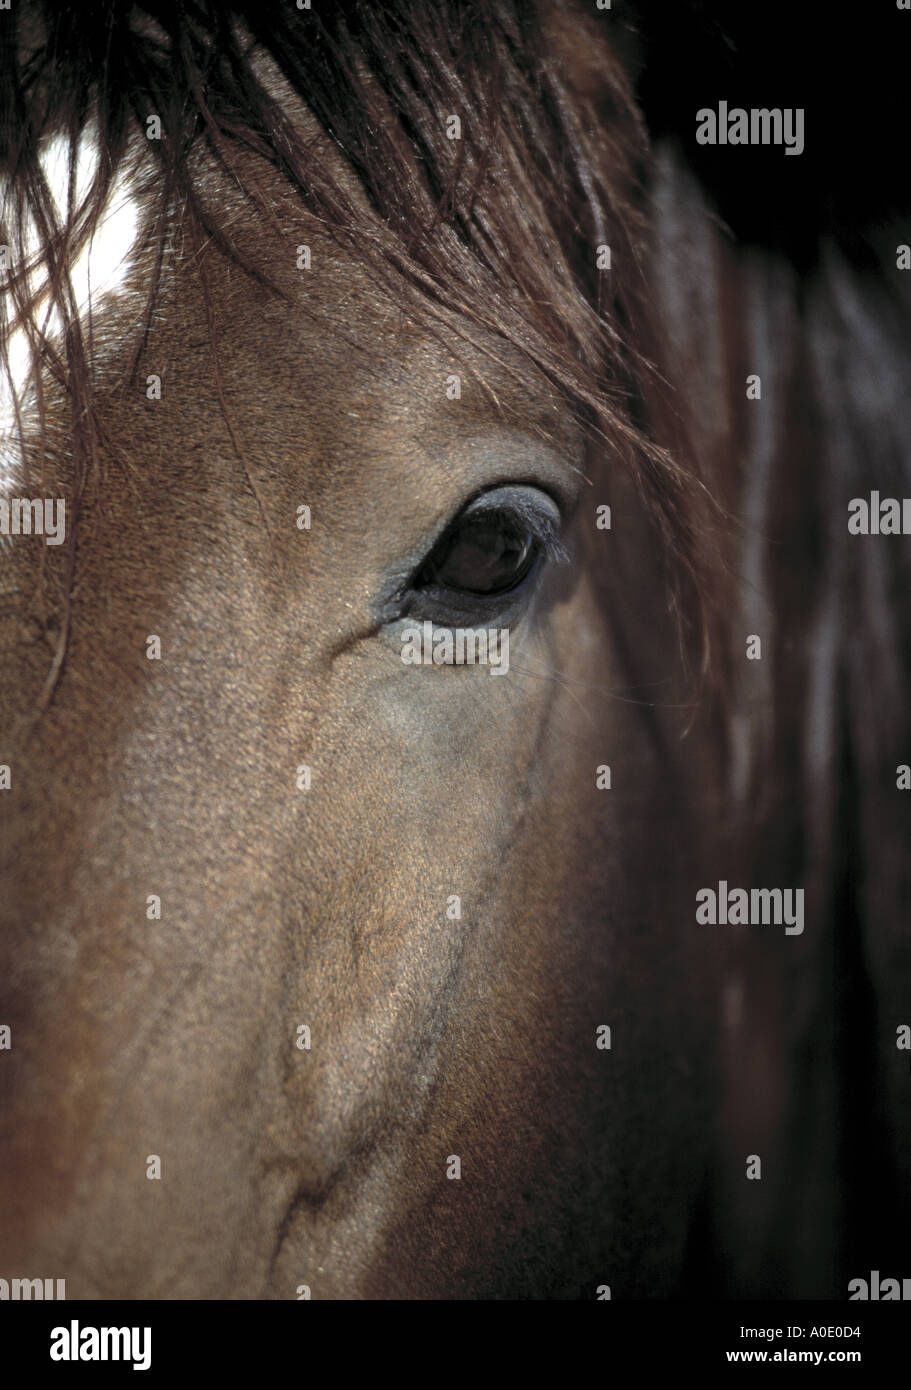 Cavallo arabo Foto Stock